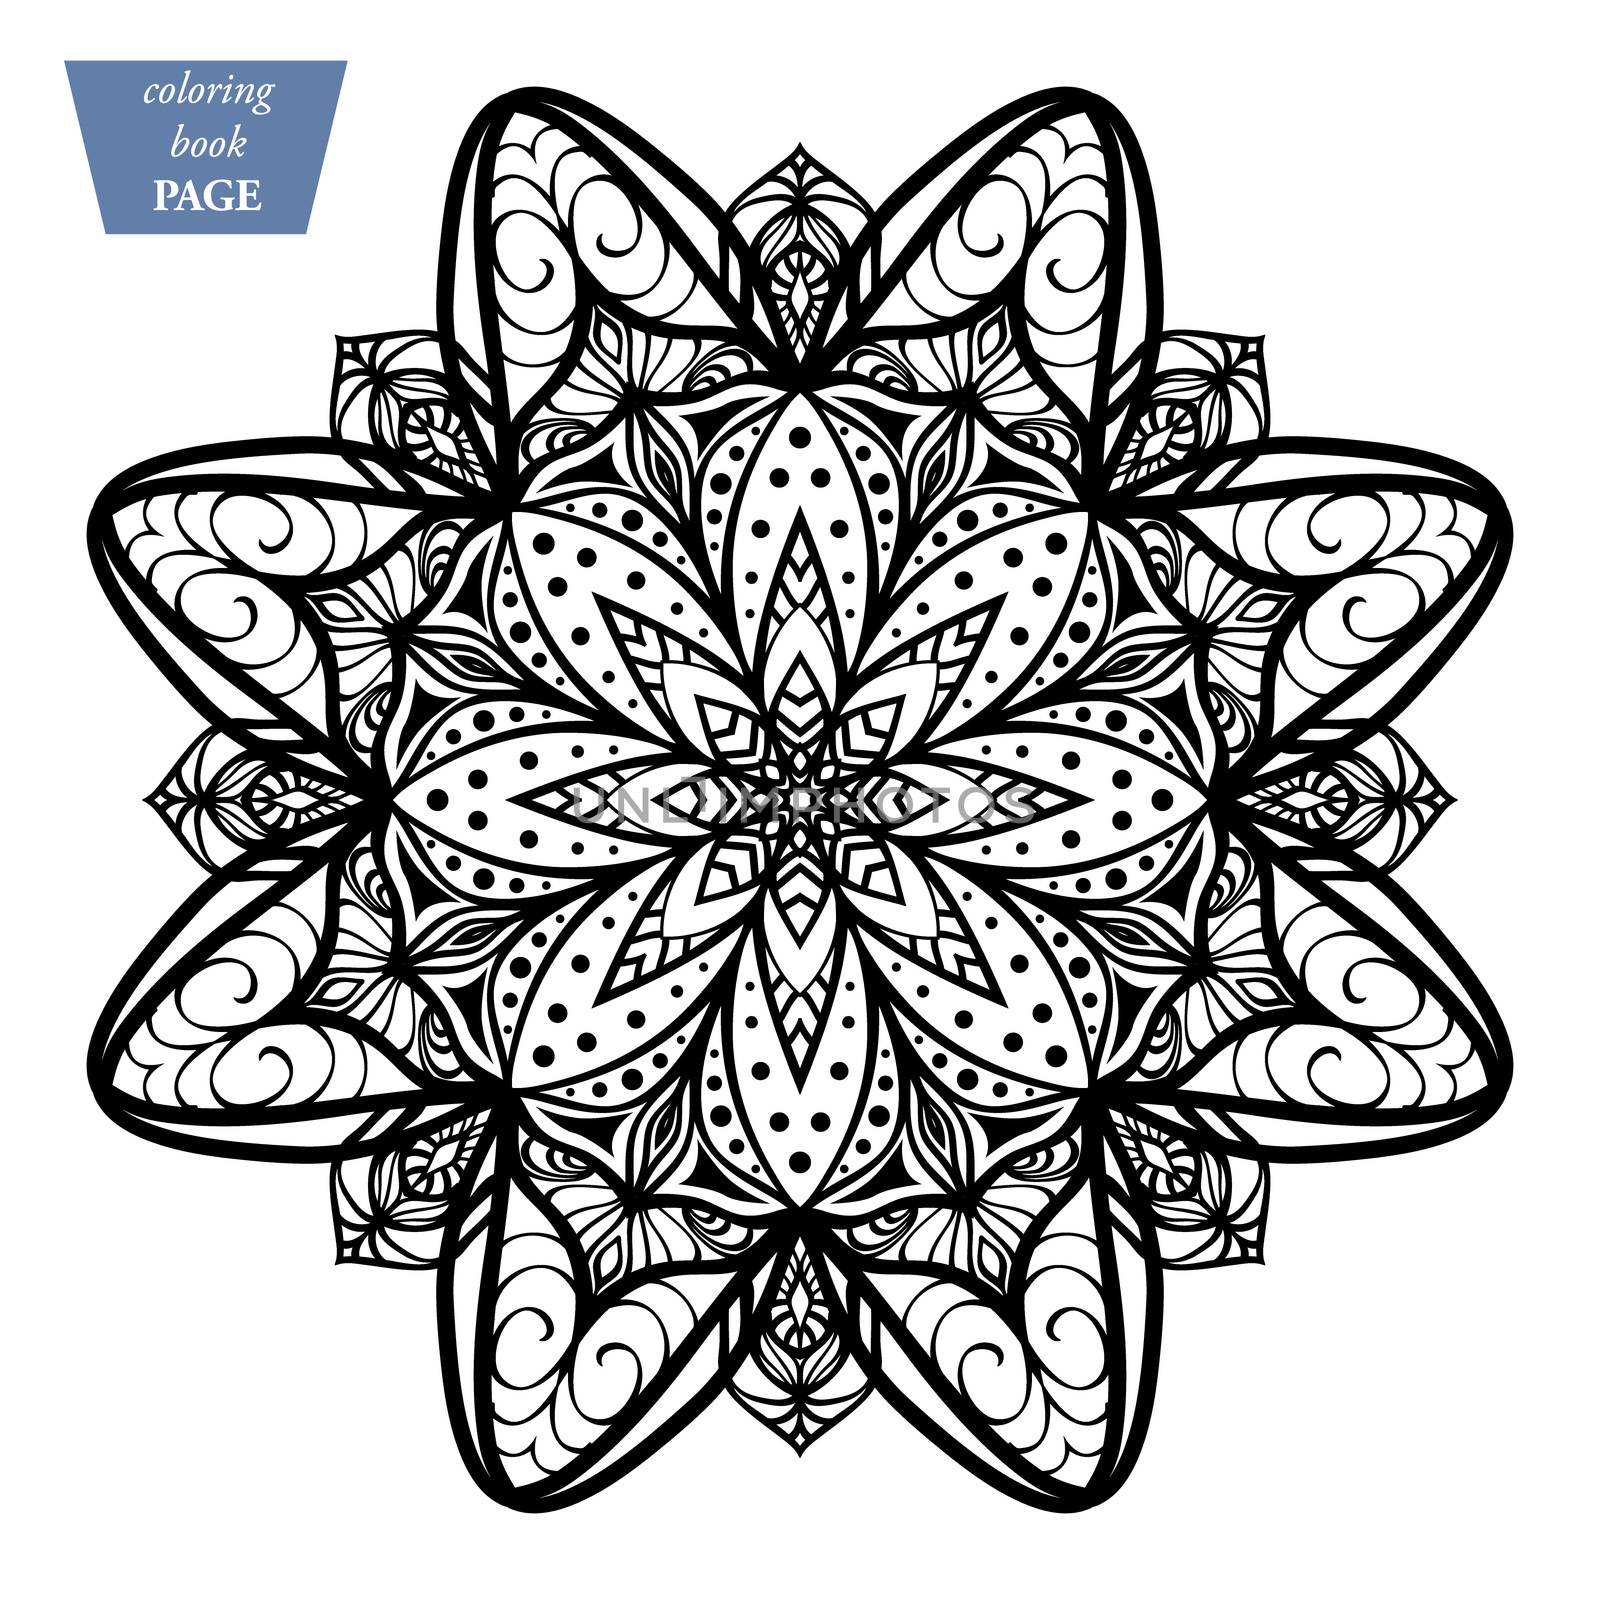 Mandala. Coloring page. Vintage decorative elements. Oriental pattern, vector illustration d by VeekSegal